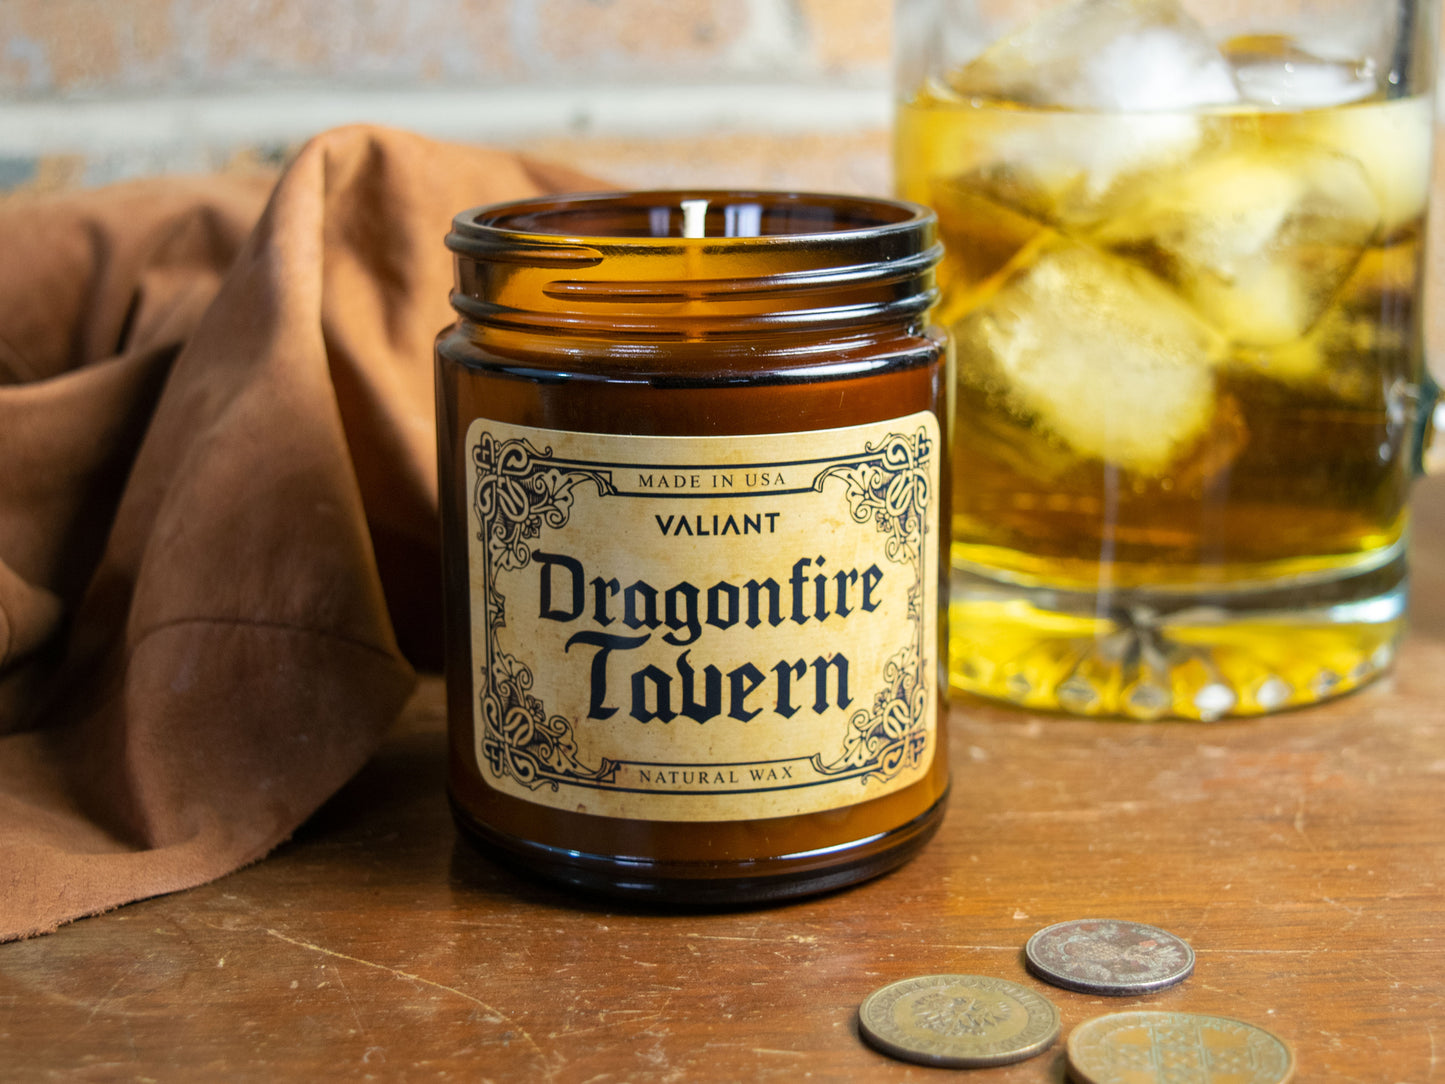 Dragonfire Tavern